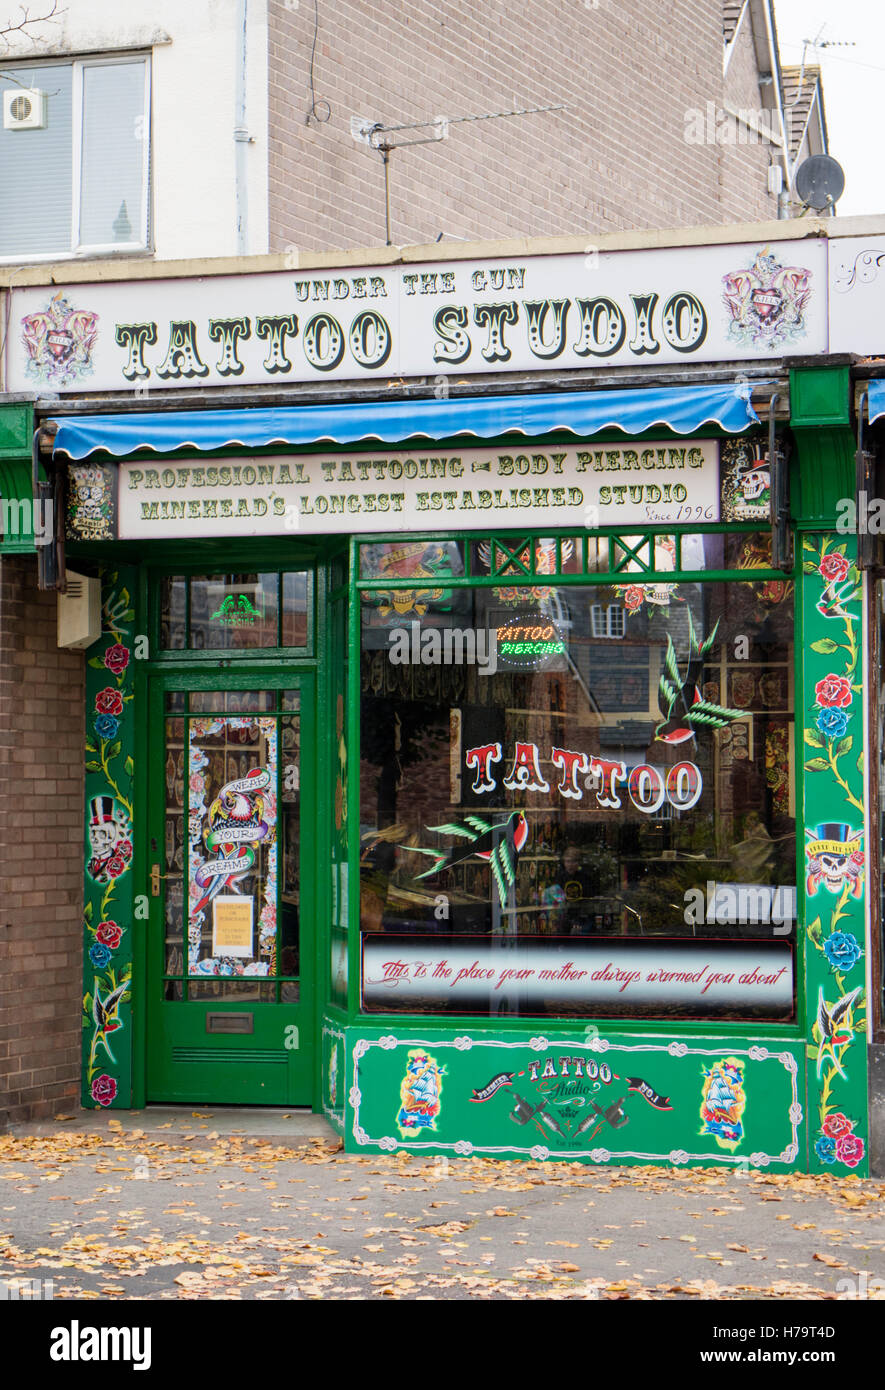 By Luke Moat, No Pain No Gain Tattoo Studio in Kent, England. : r/tattoos